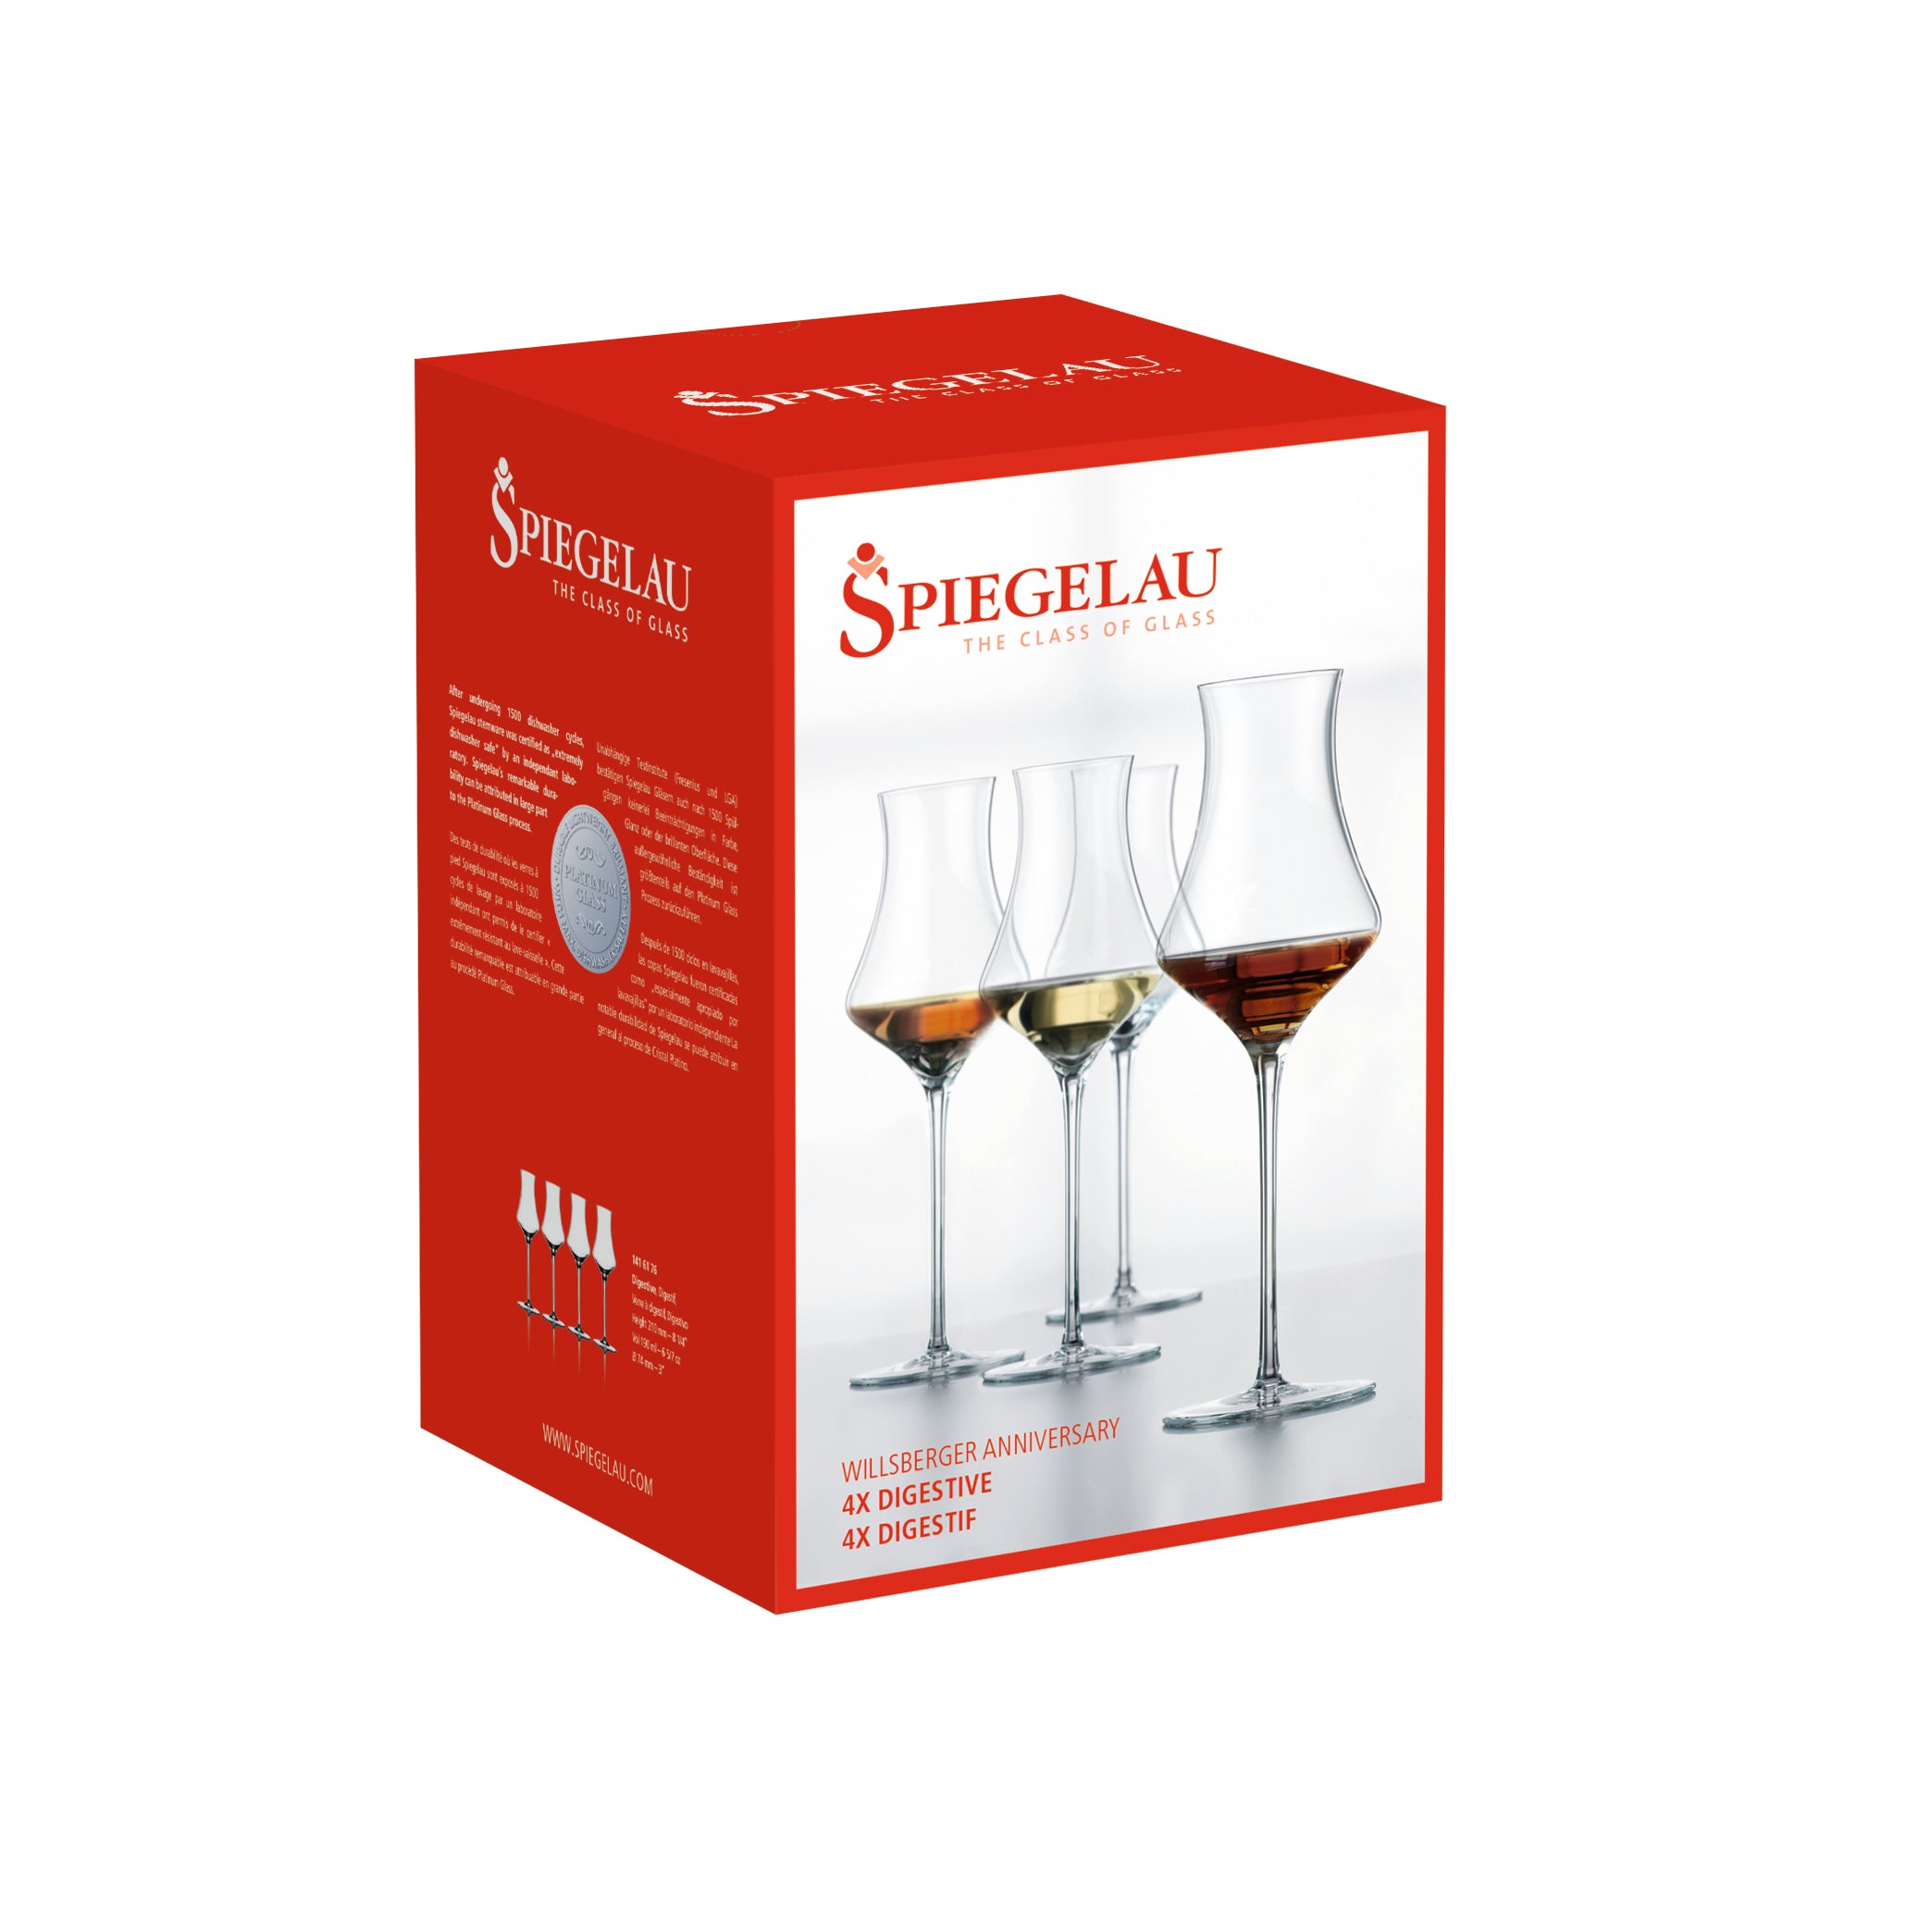 Spiegelau Willsberger 9.9 oz Digestive glass (Set of 4)